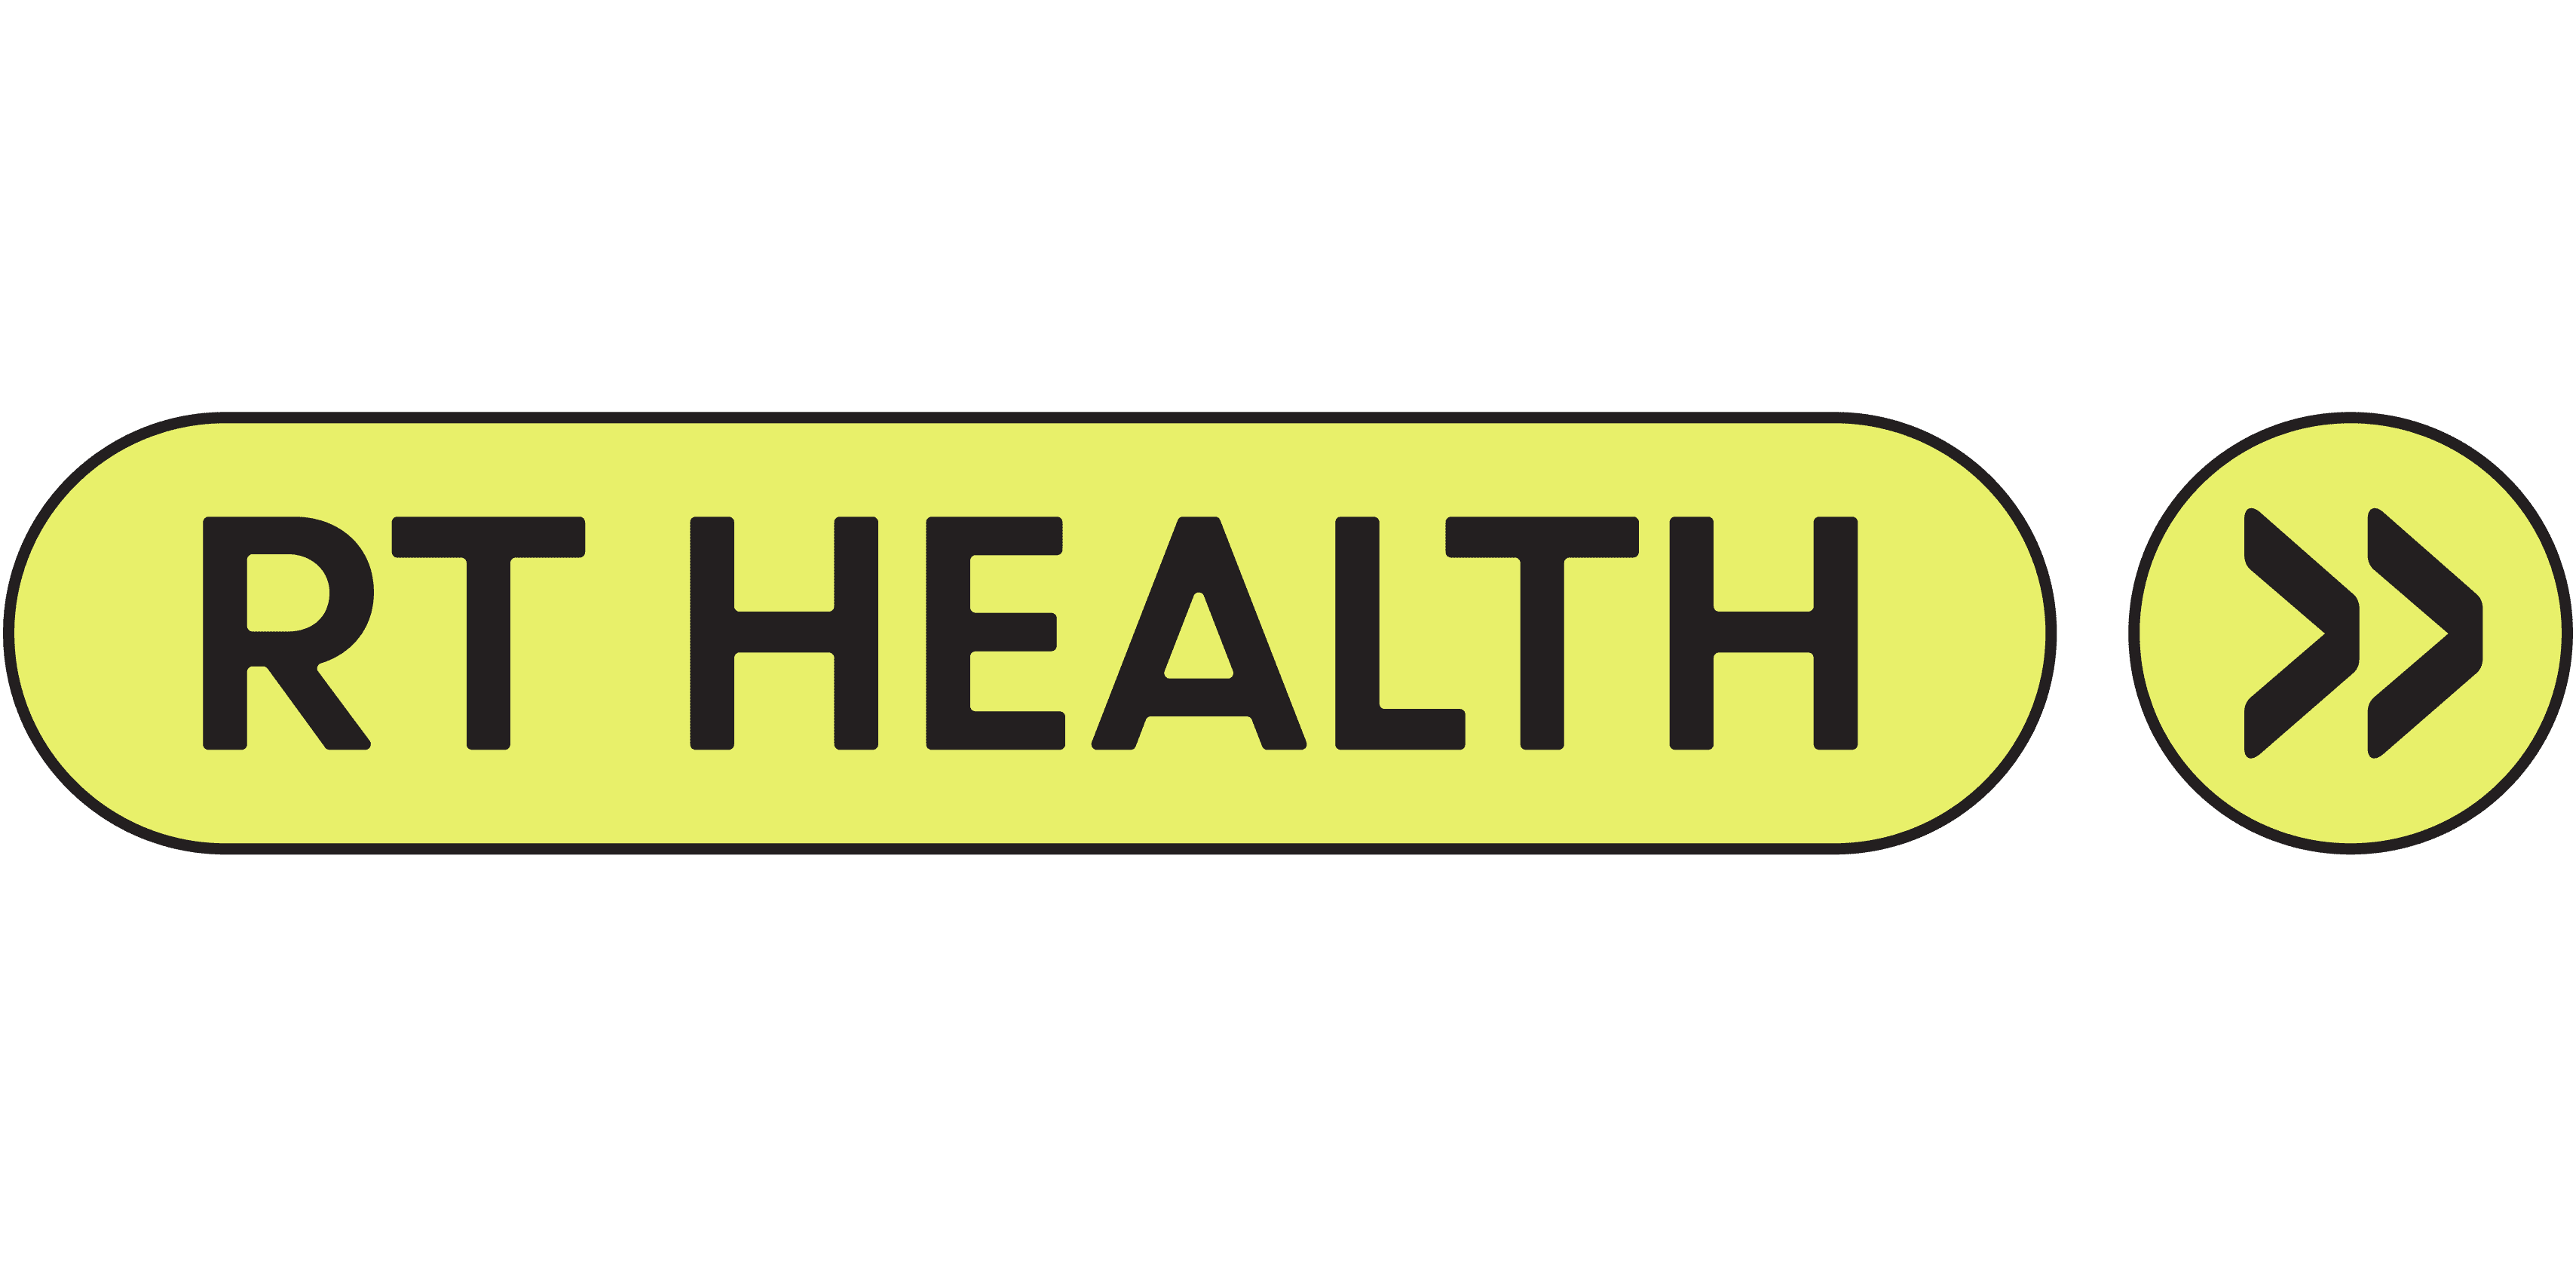 RT health insurance